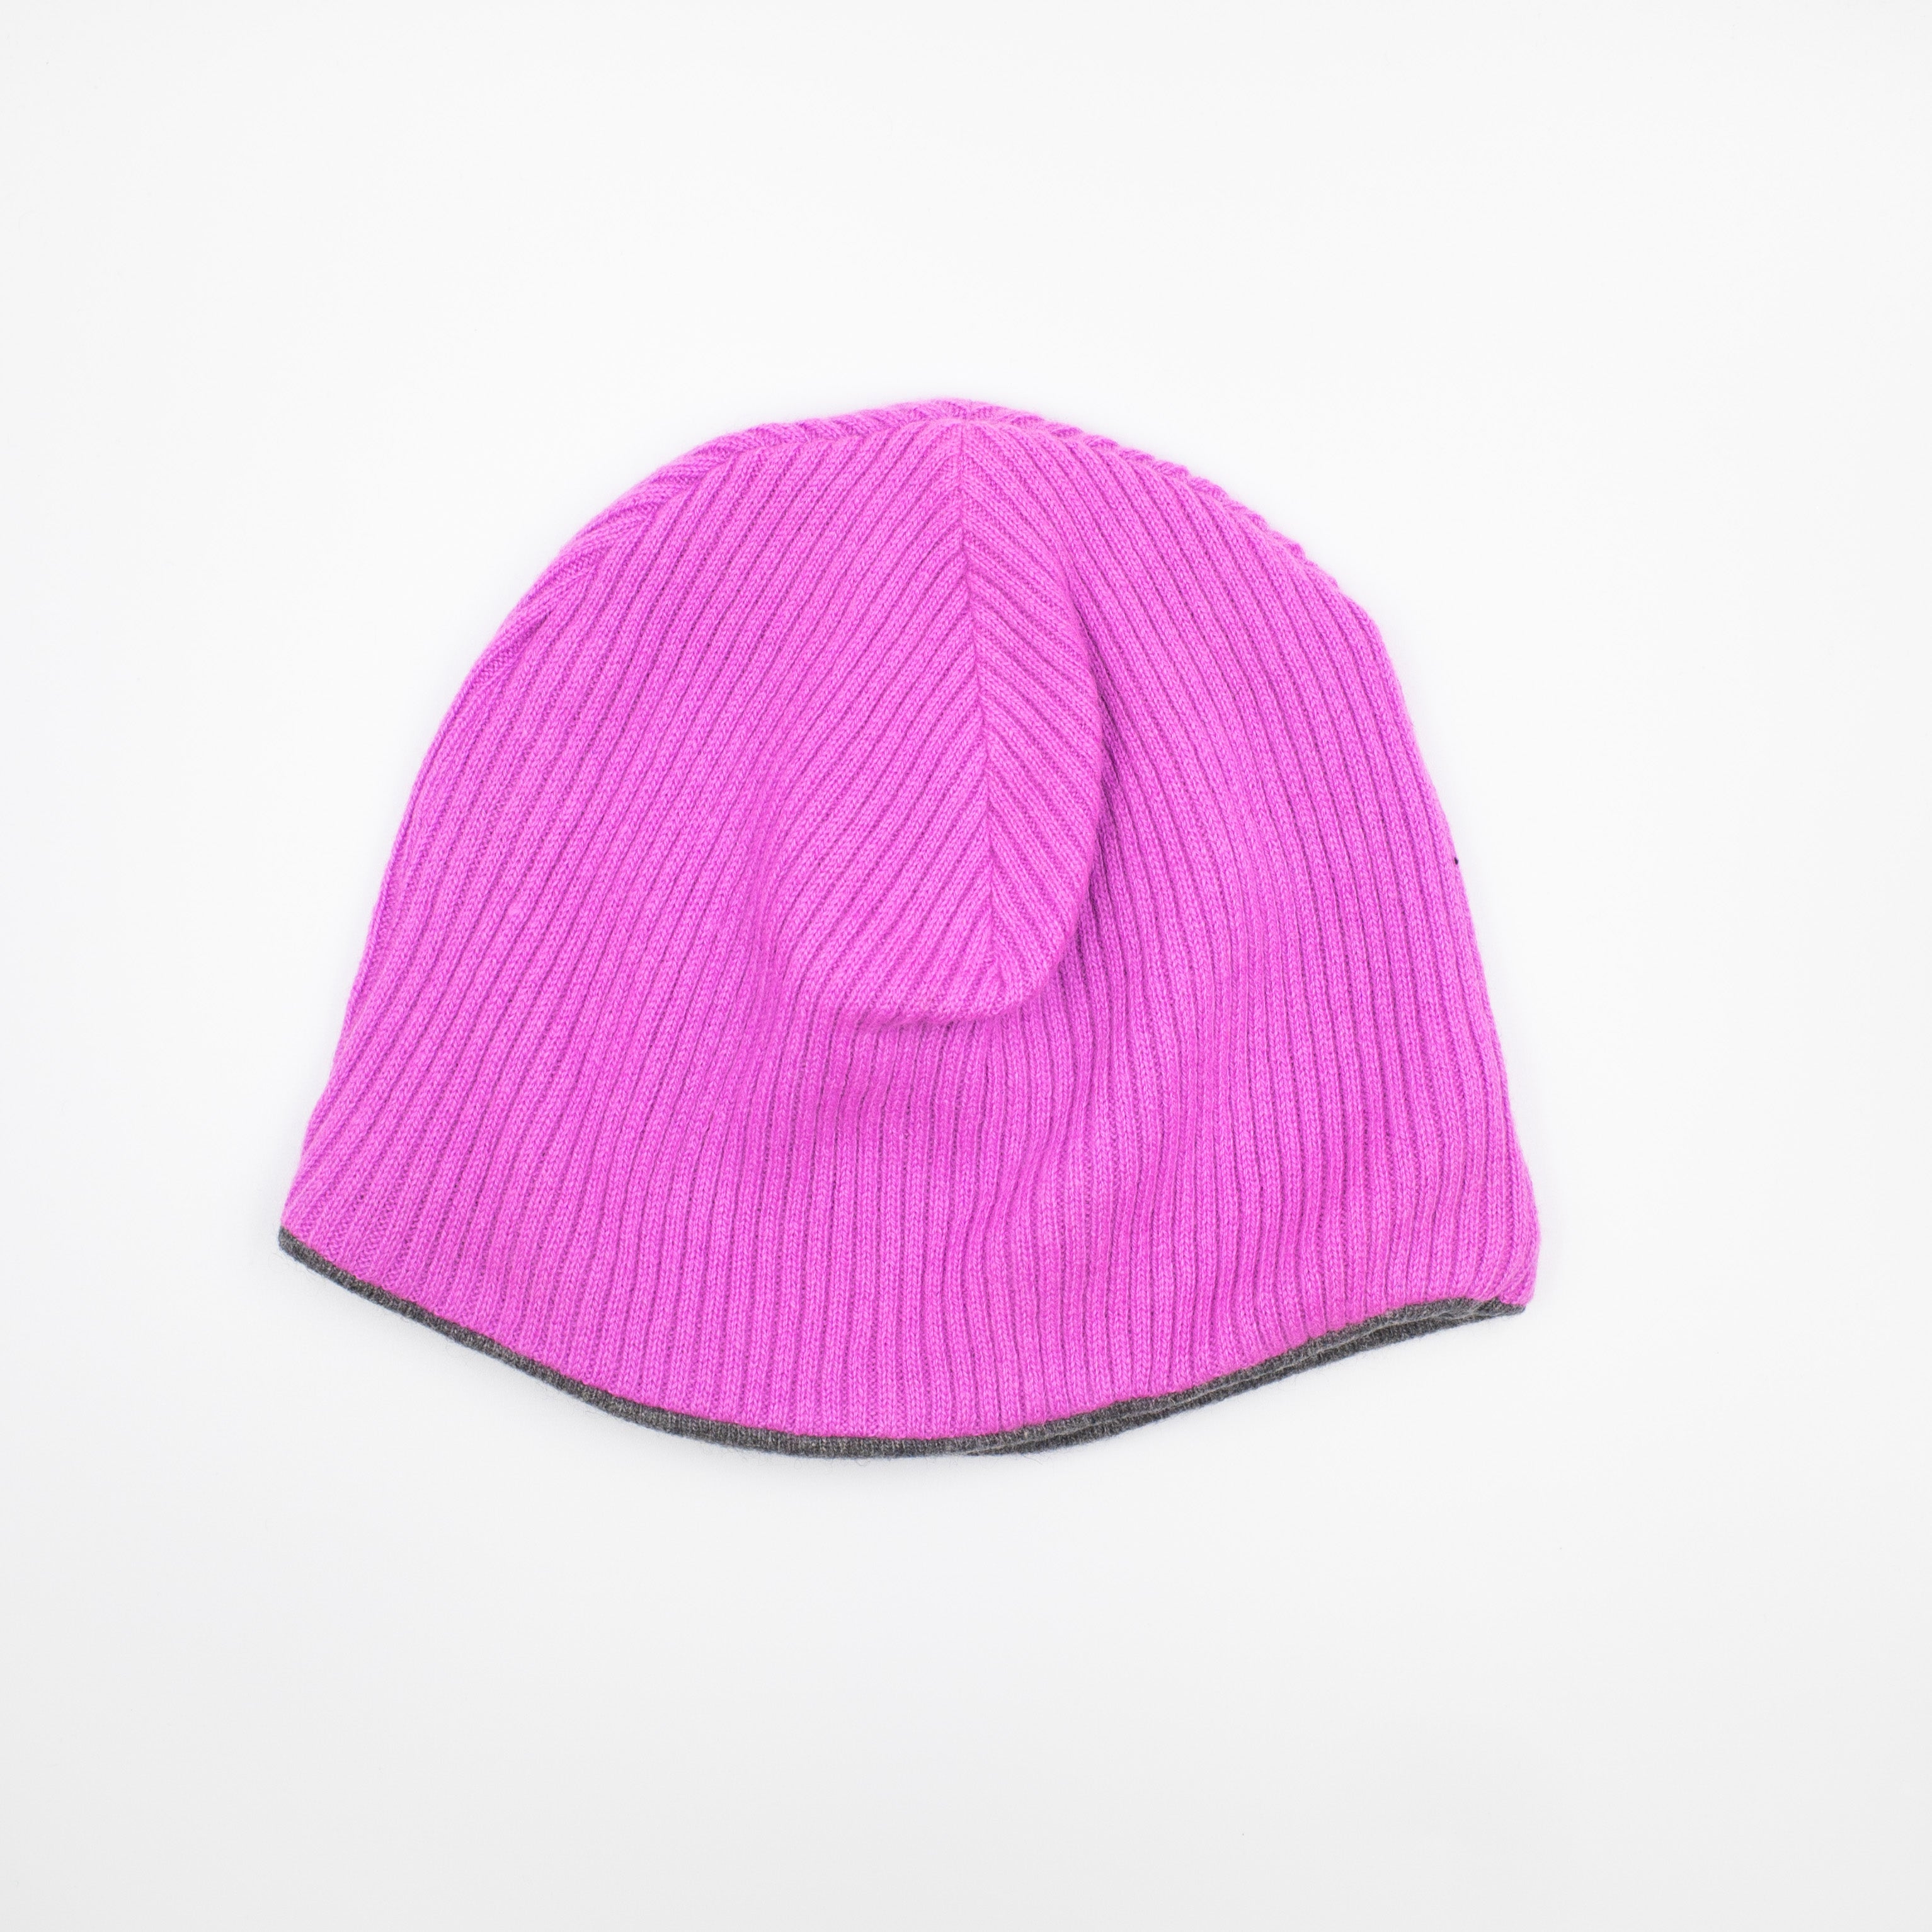 Foxglove Pink and Grey Beanie Hat